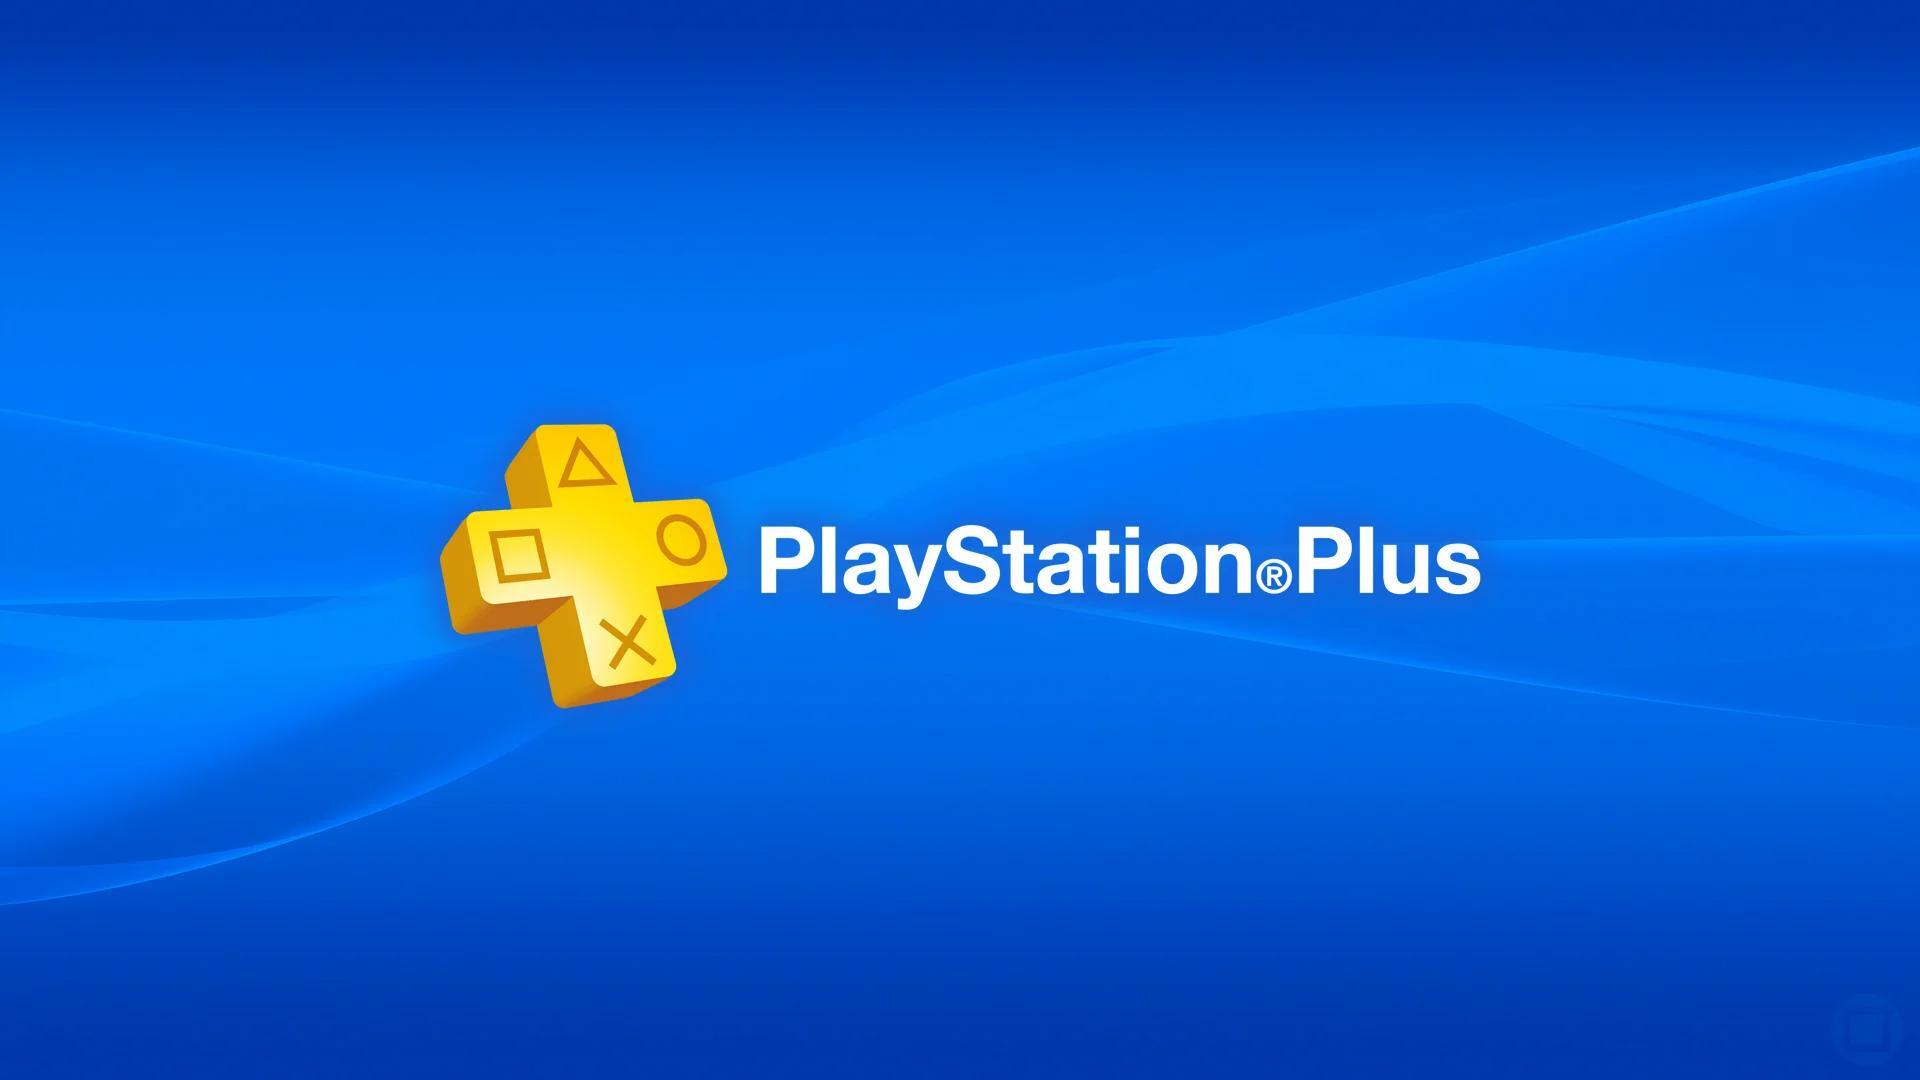   PlayStation Plus     33%